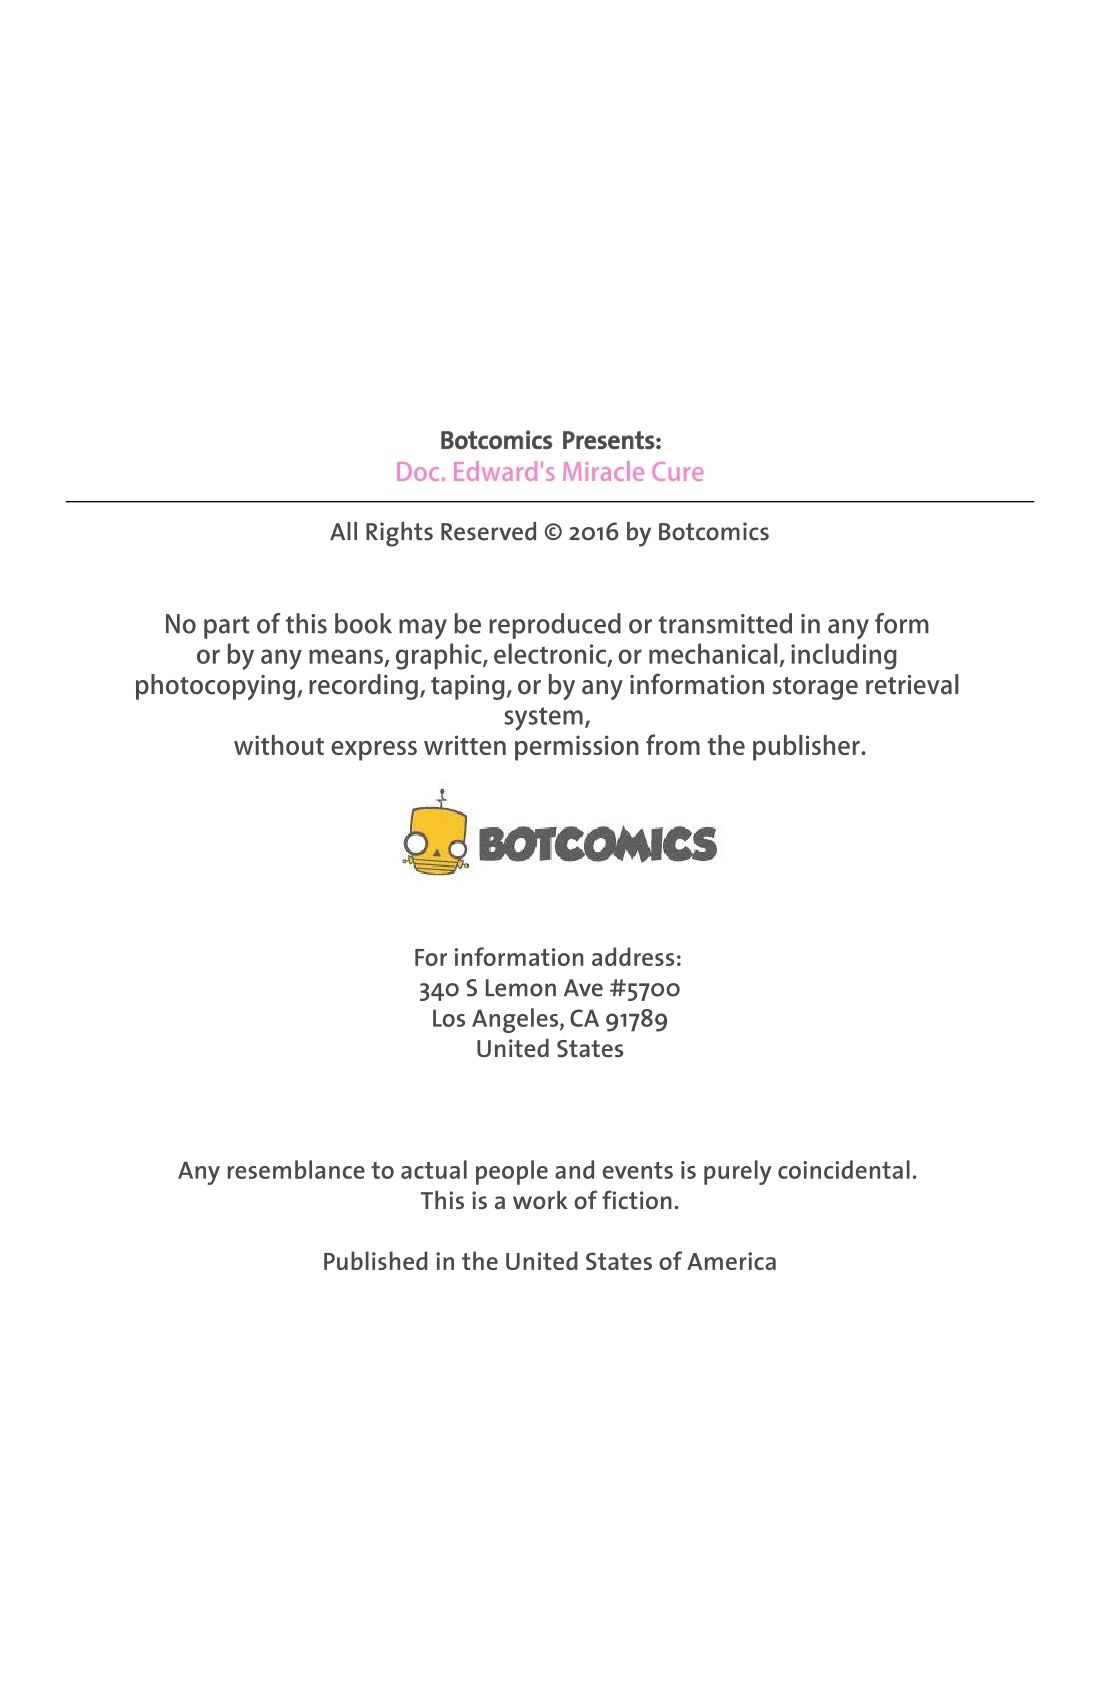 Doc. Edwards Miracle Cure BotComics page 2